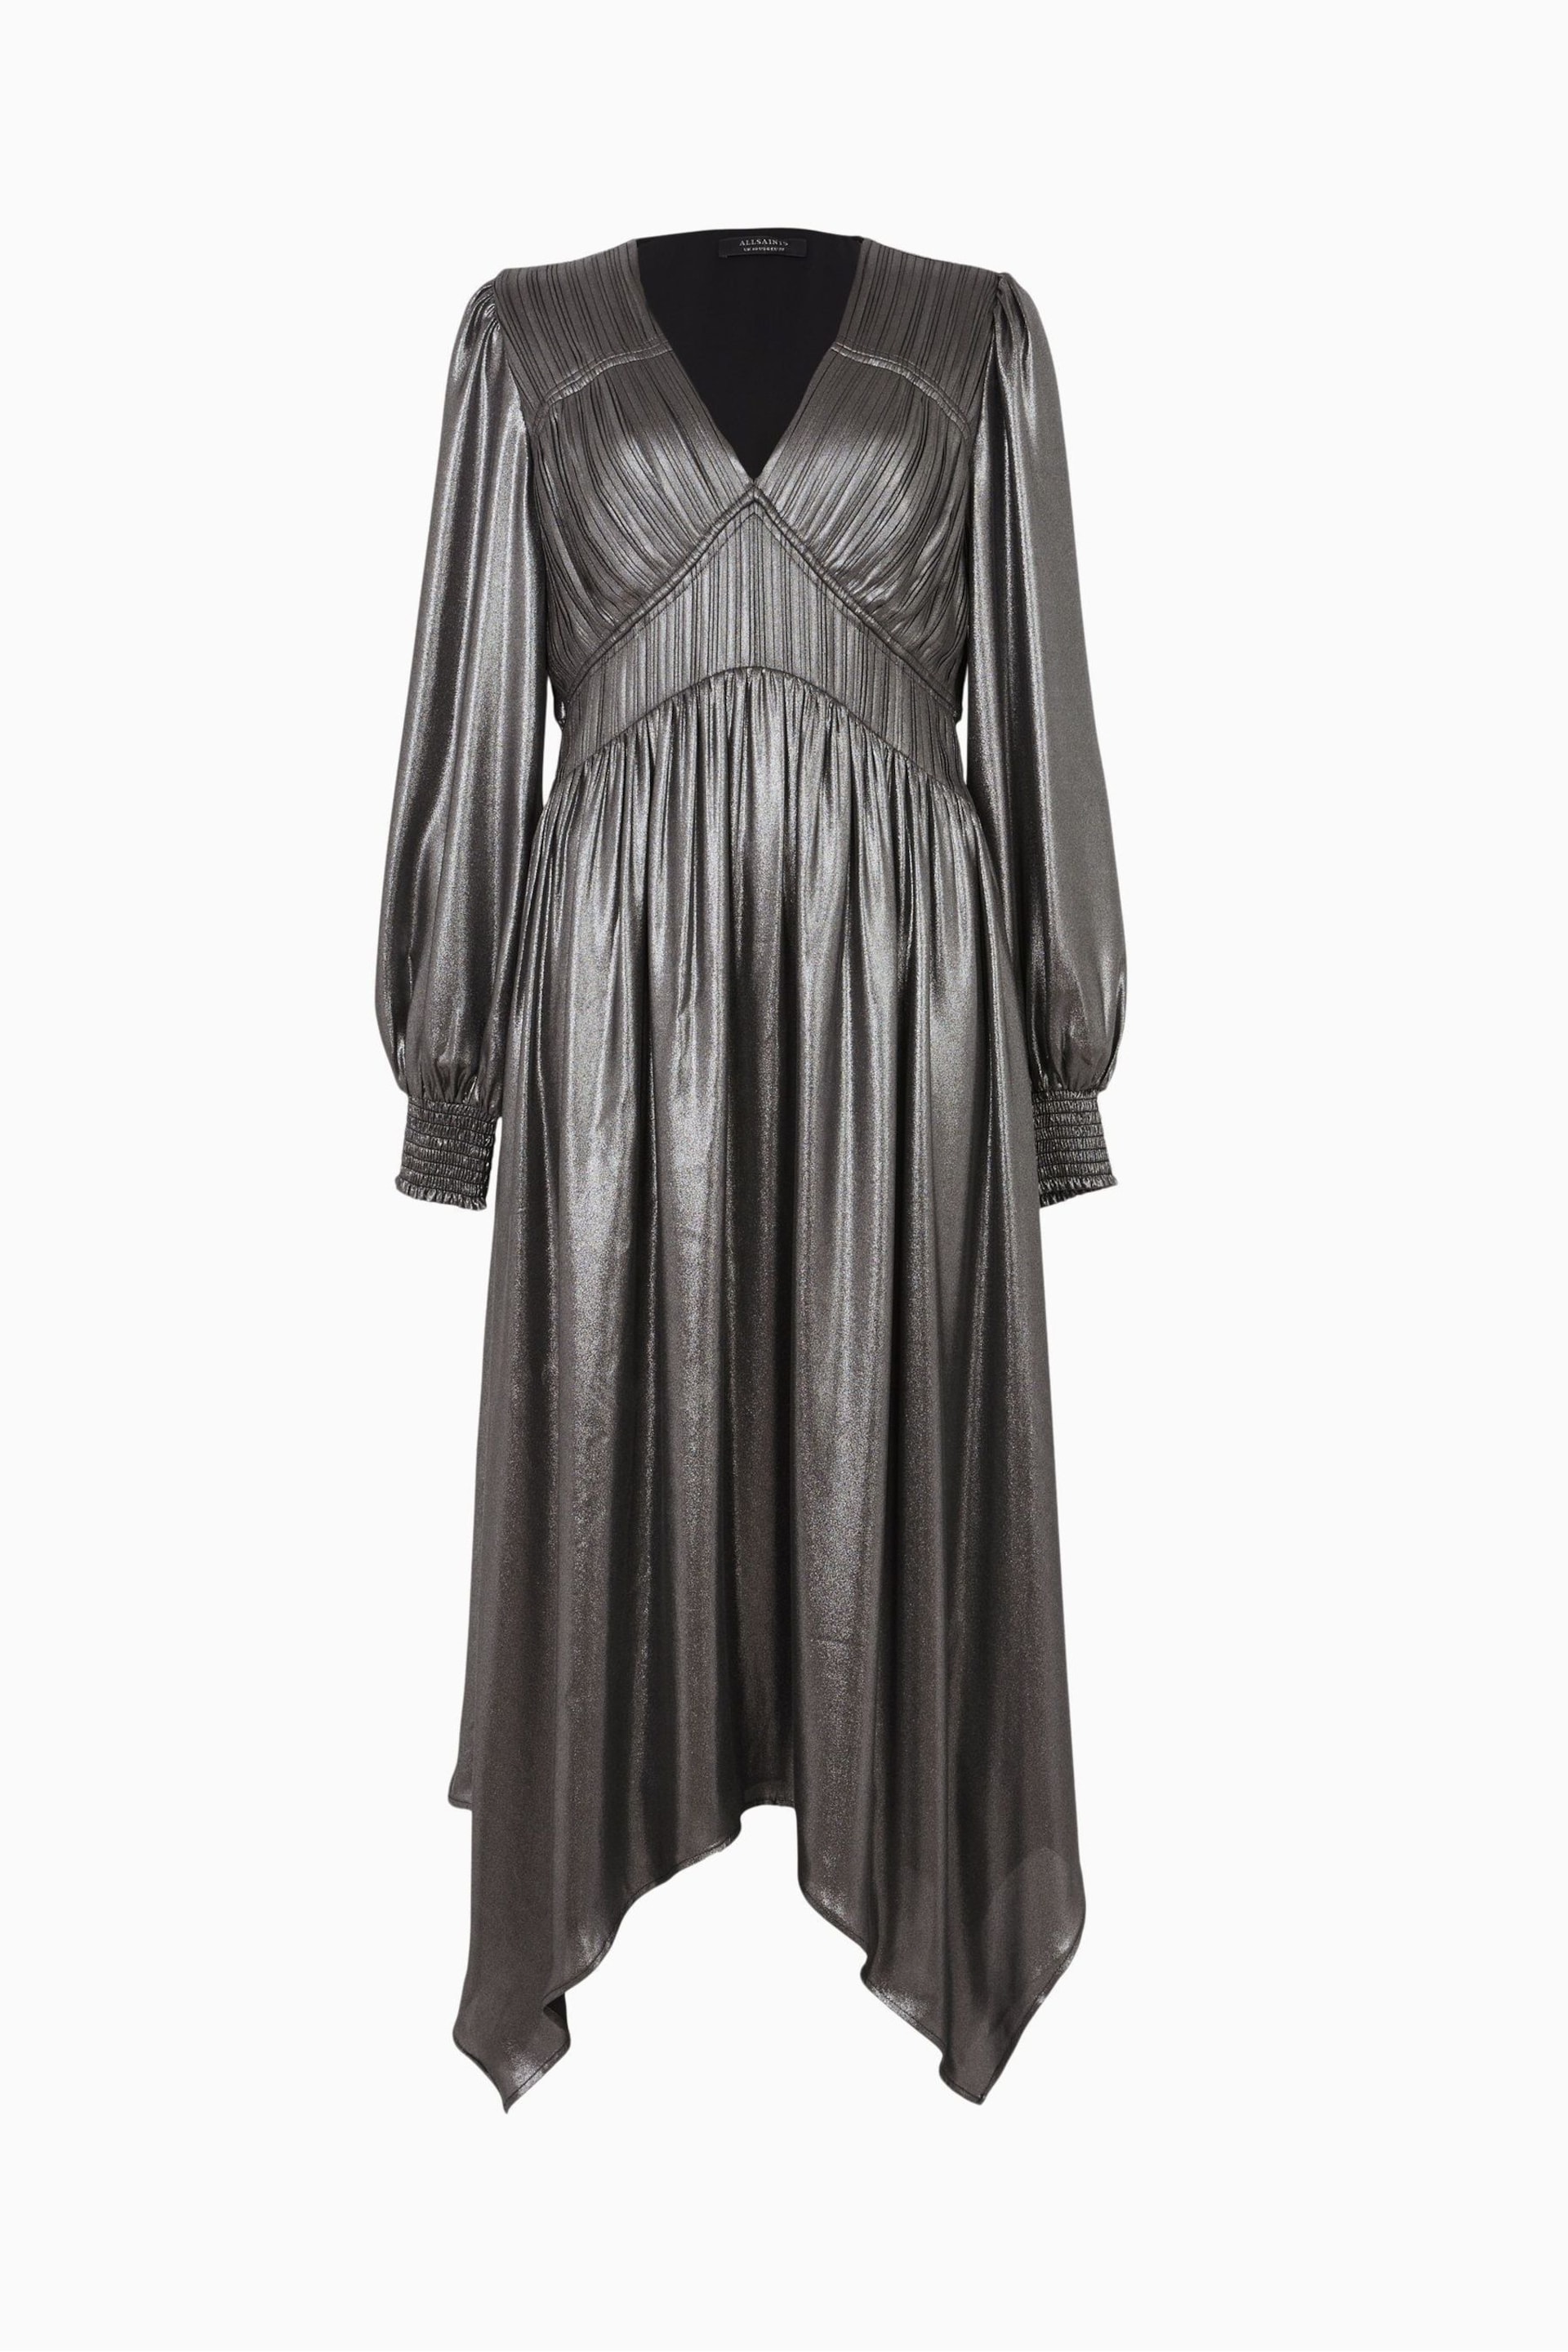 AllSaints Grey Estelle Metallic Dress - Image 7 of 7